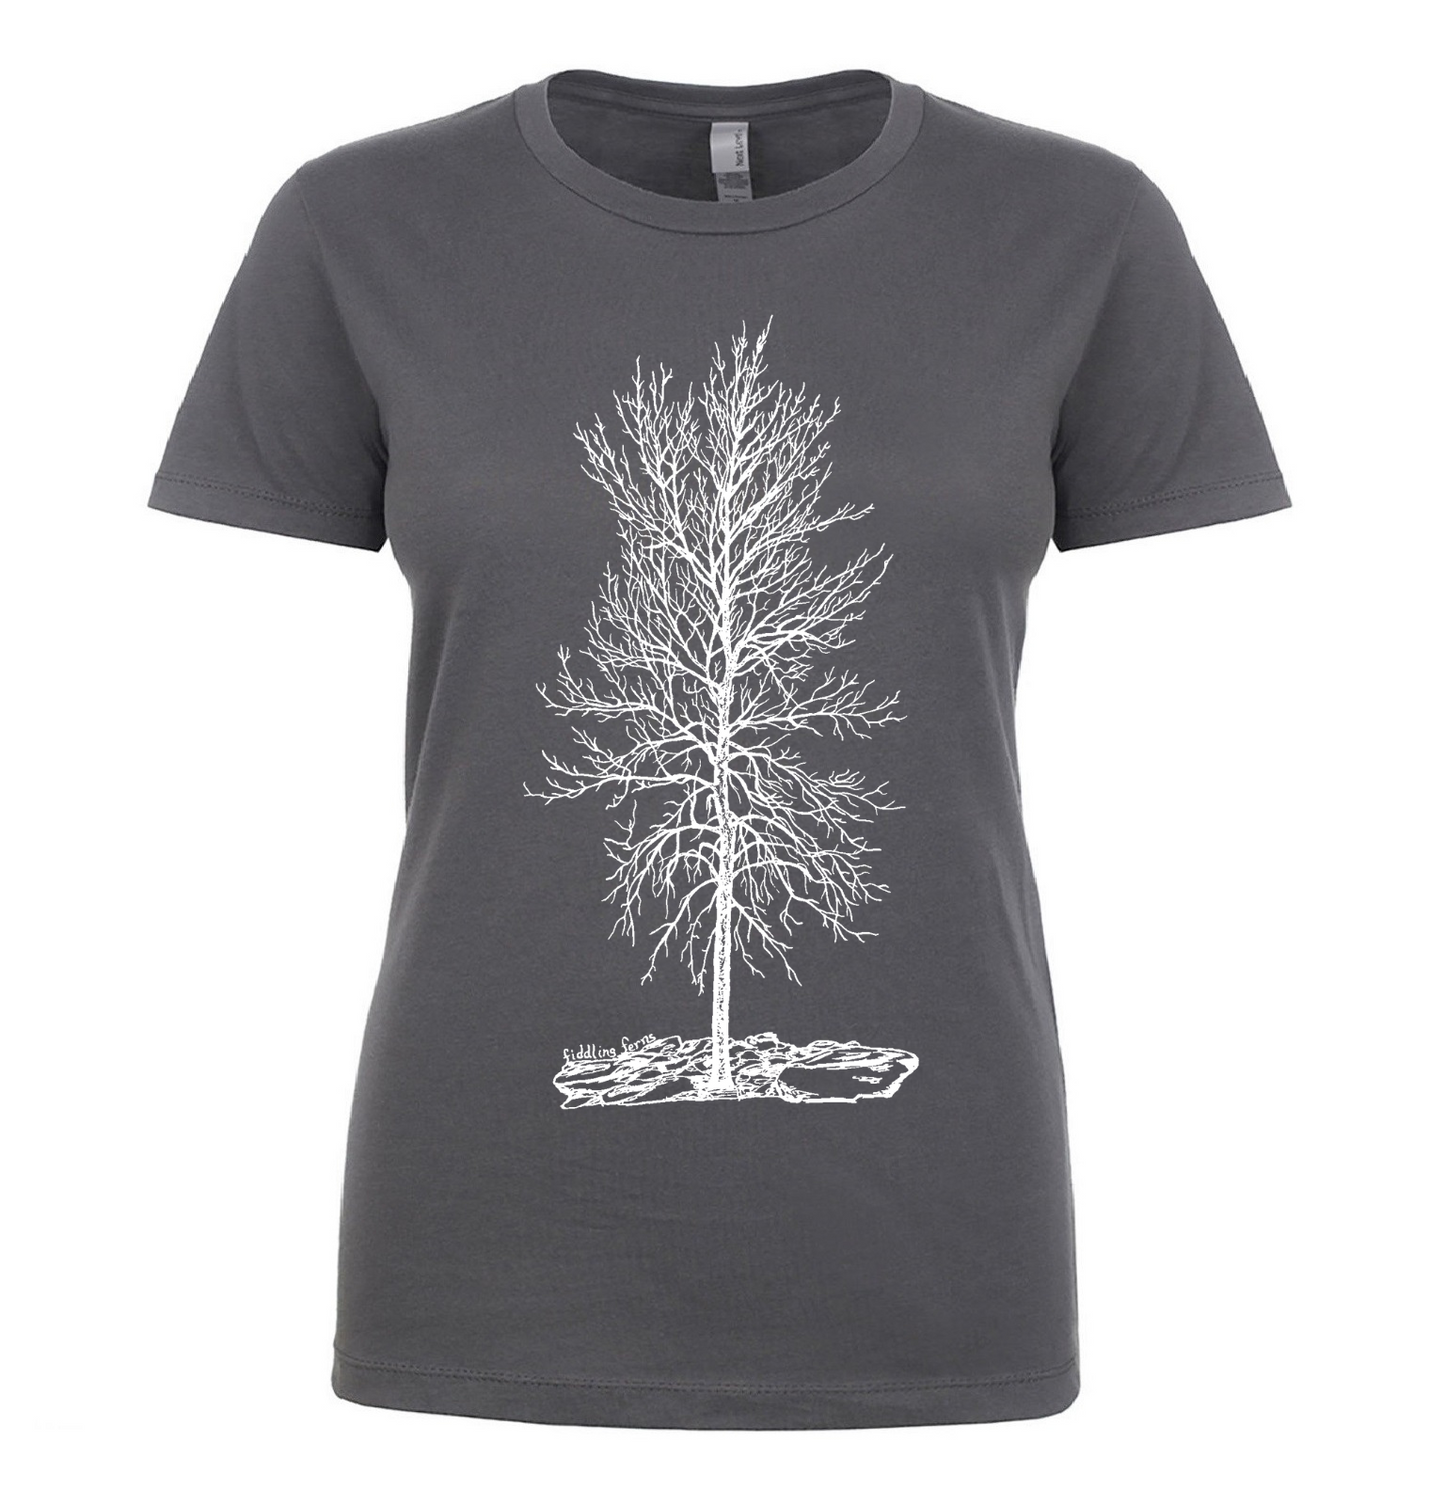 Bare Winter Tree "Solitude" Ladies T Shirt